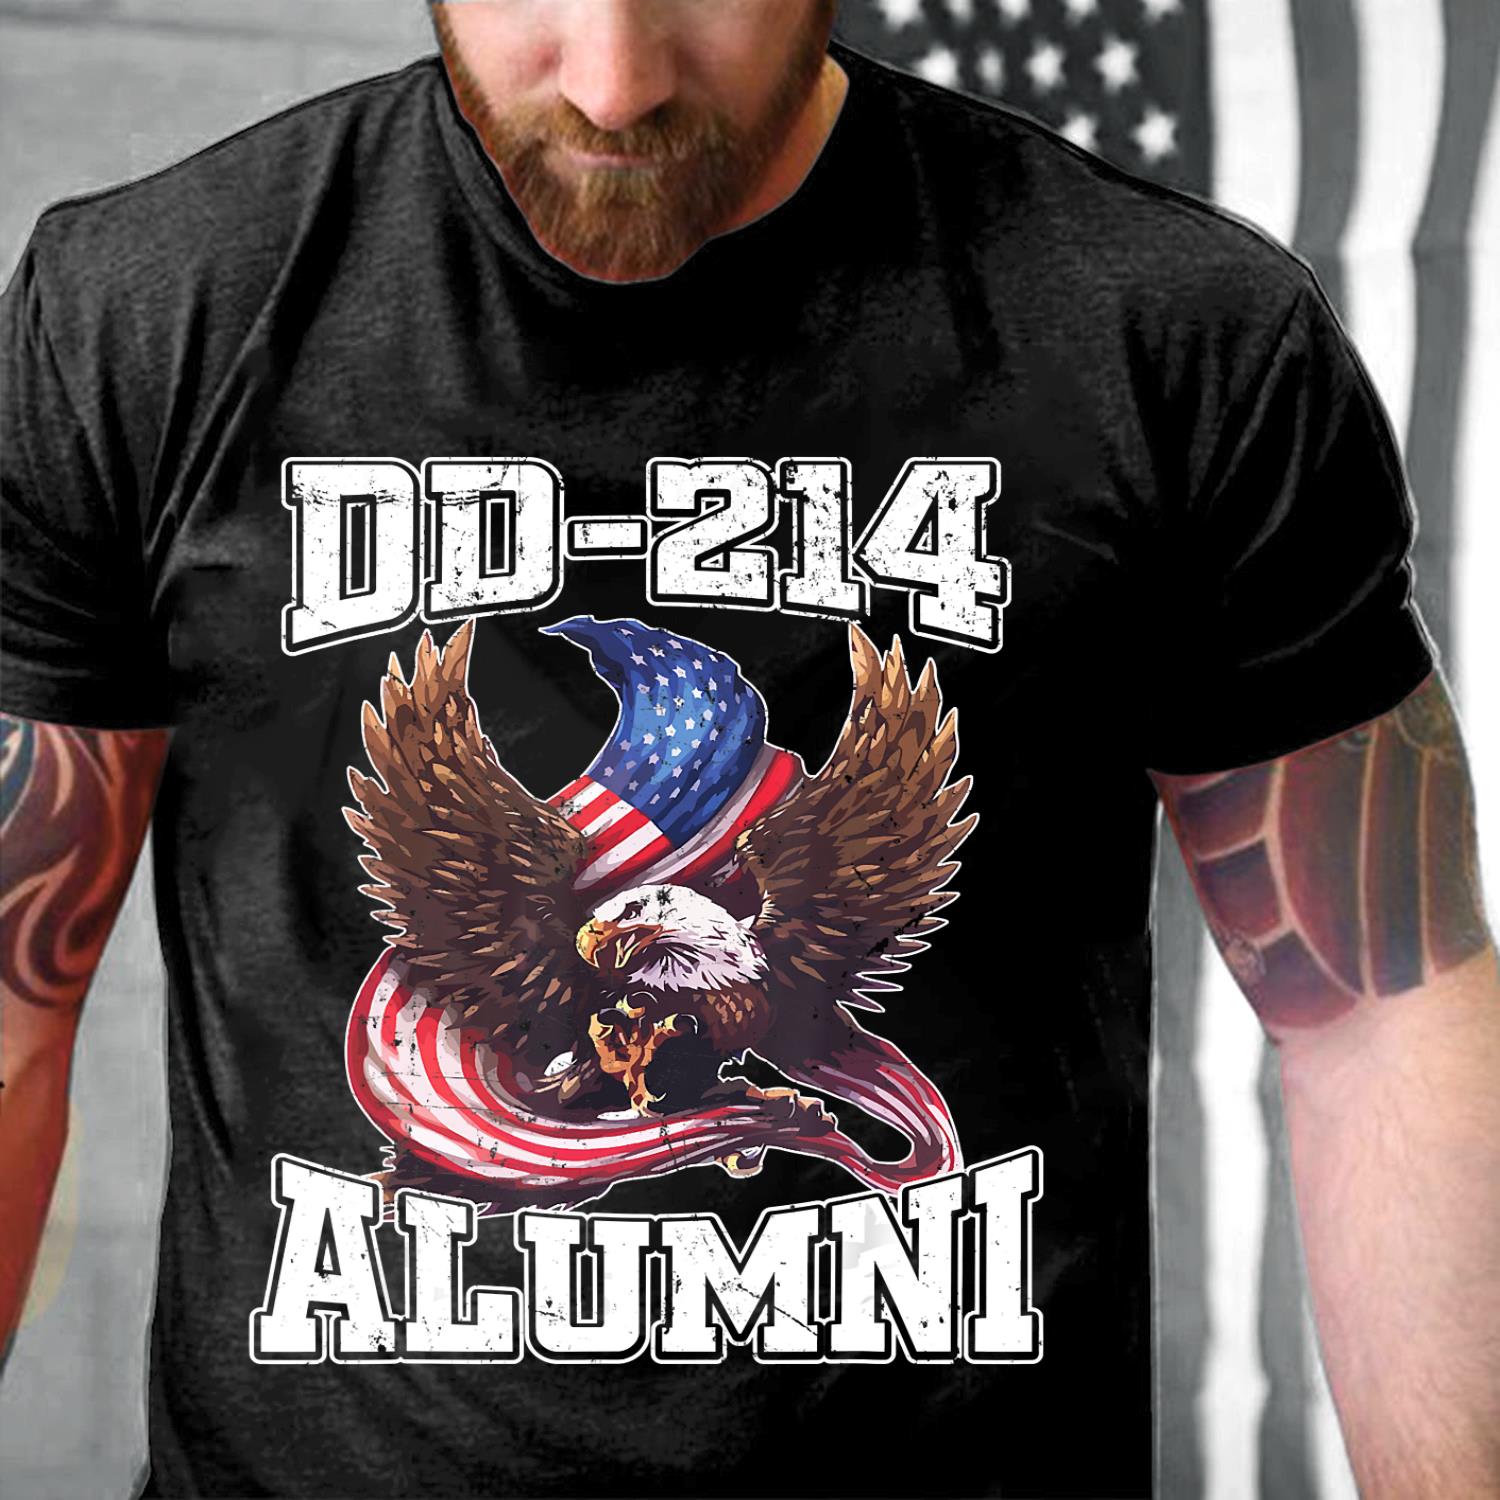 DD-214 Alumni, DD214 T-Shirt